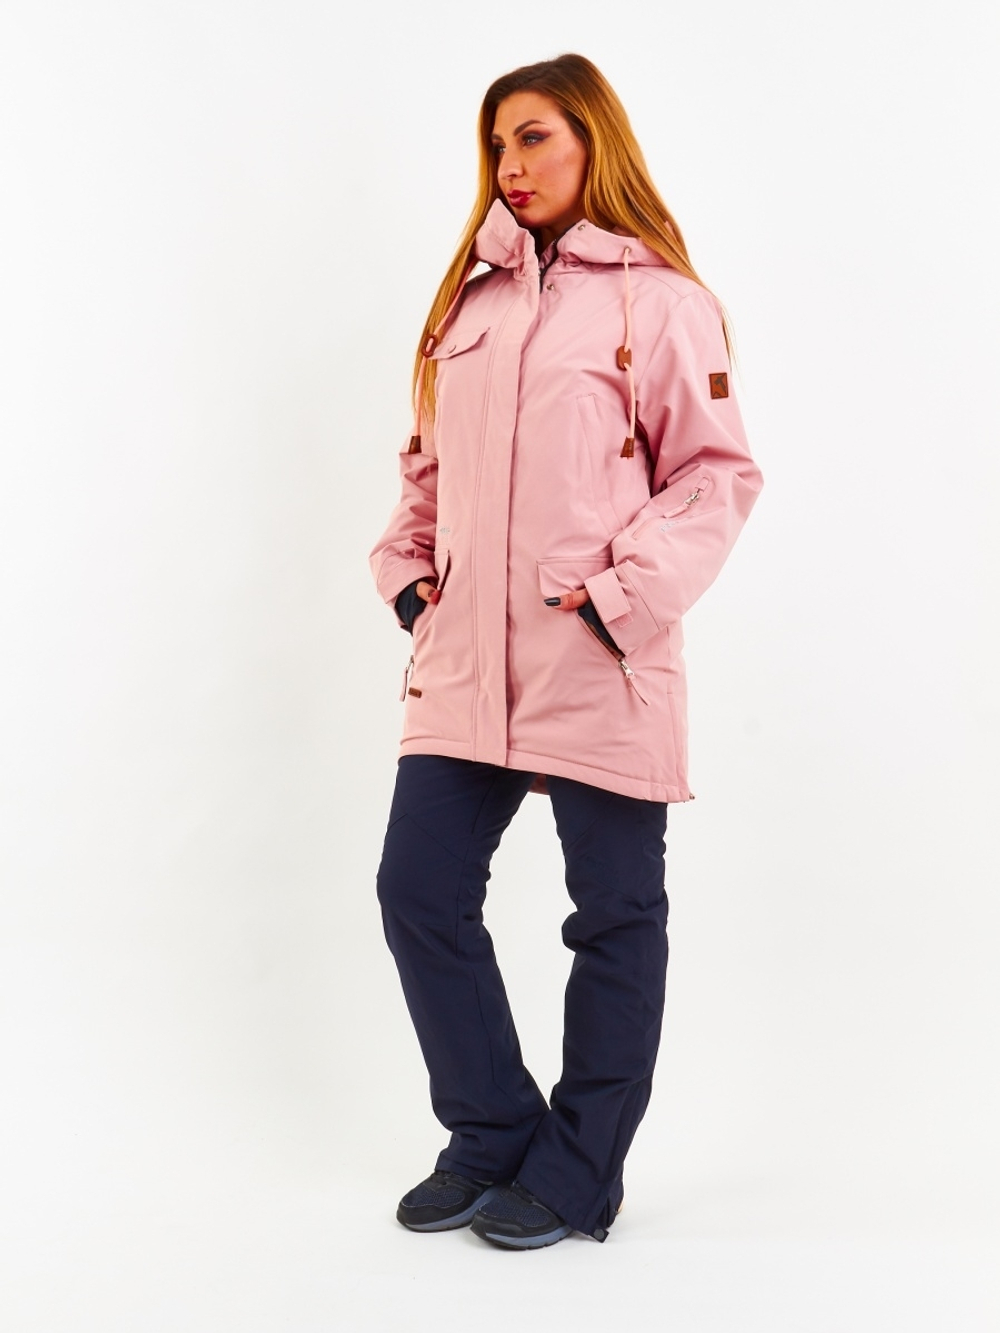 Куртка Tisent 551044 (Р06) Розовый